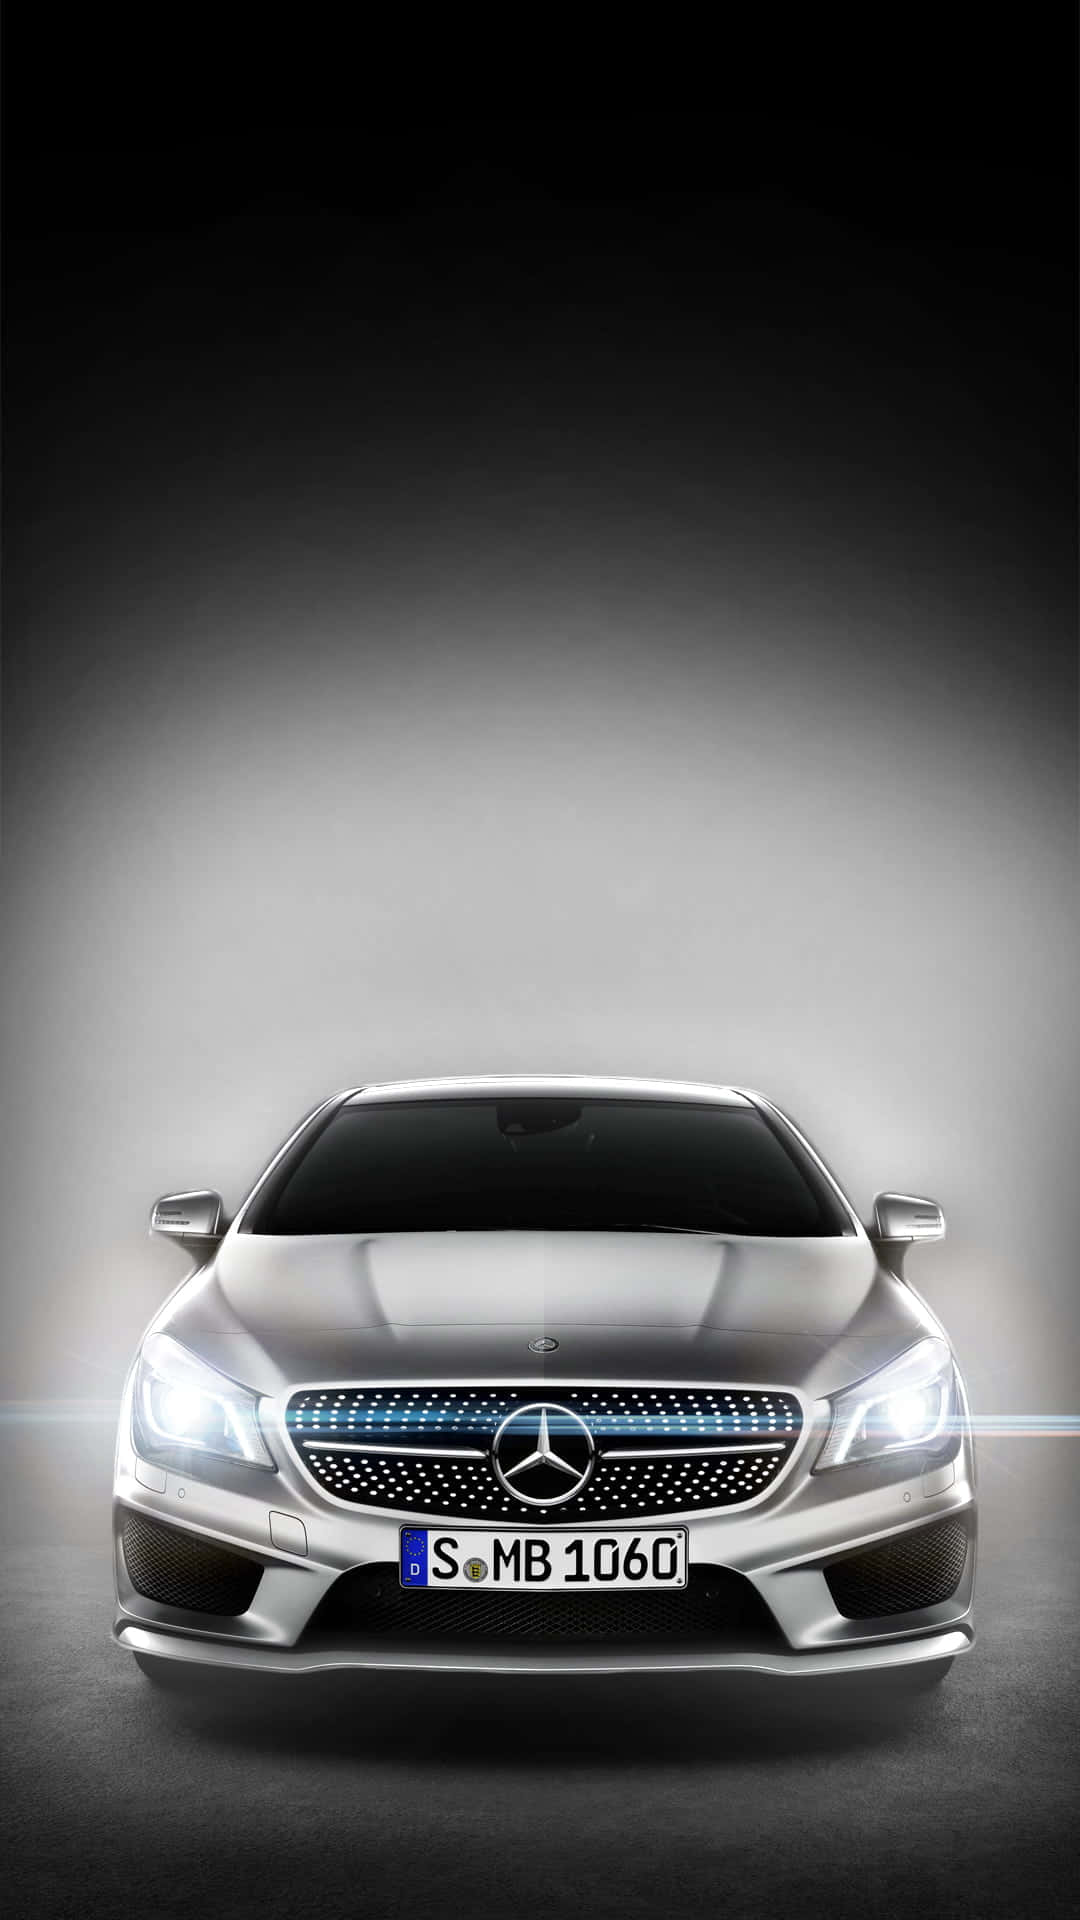 Interesting Mercedes Benz Phone Screensaver Wallpaper